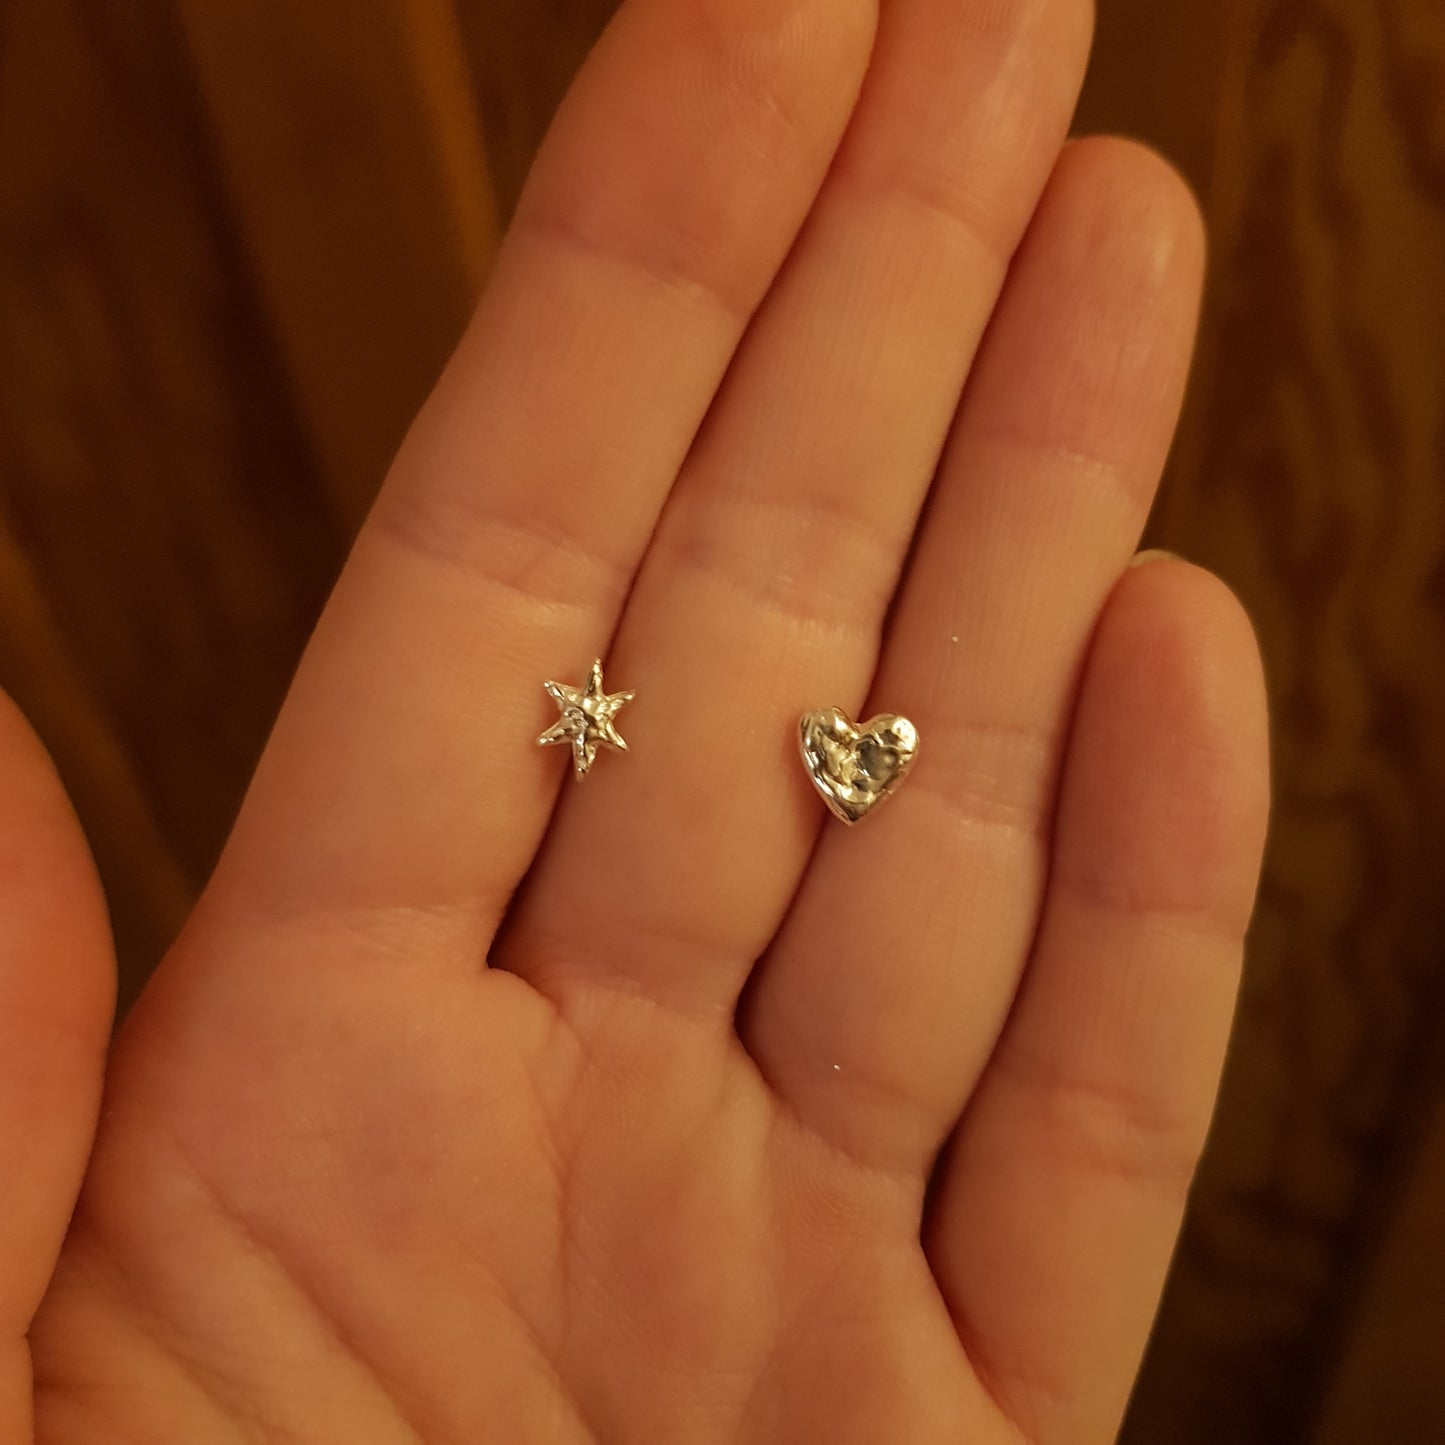 little star and heart stud earrings